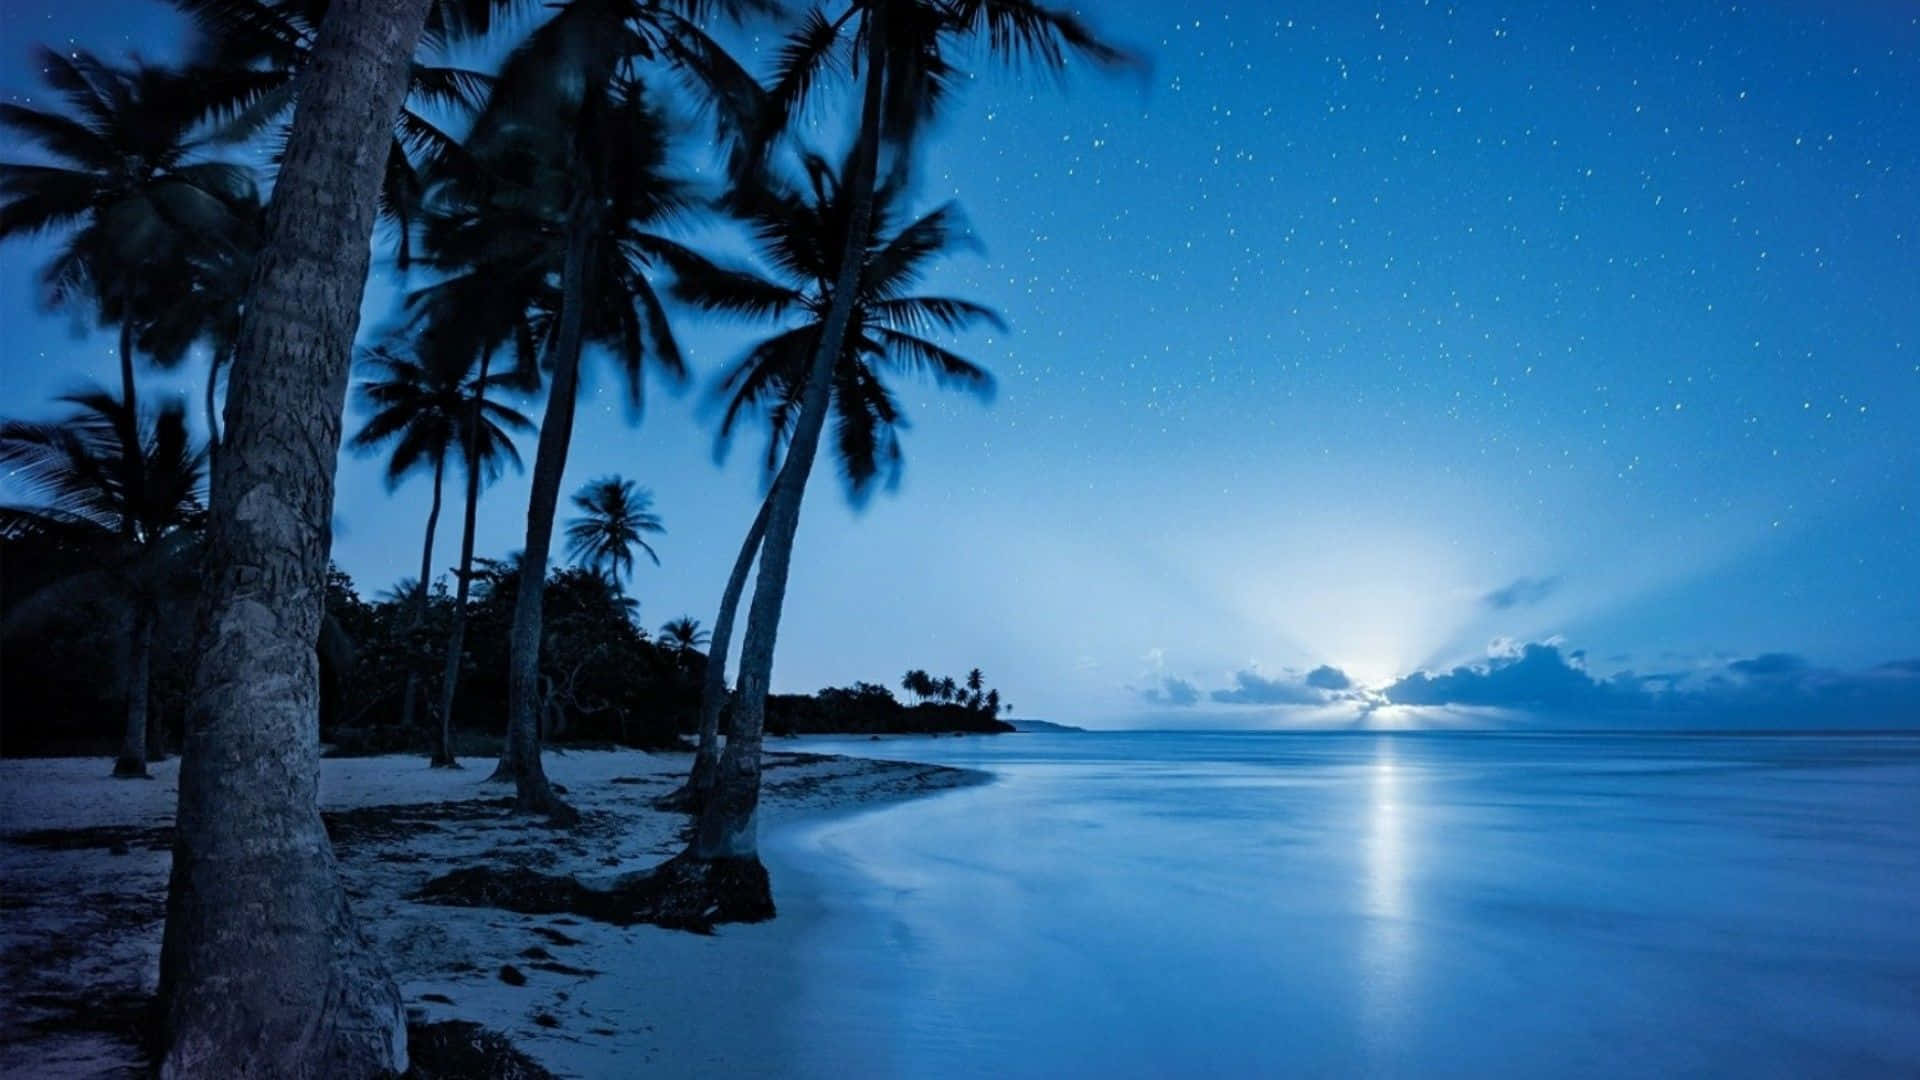 Light Blue Night Beach Picture